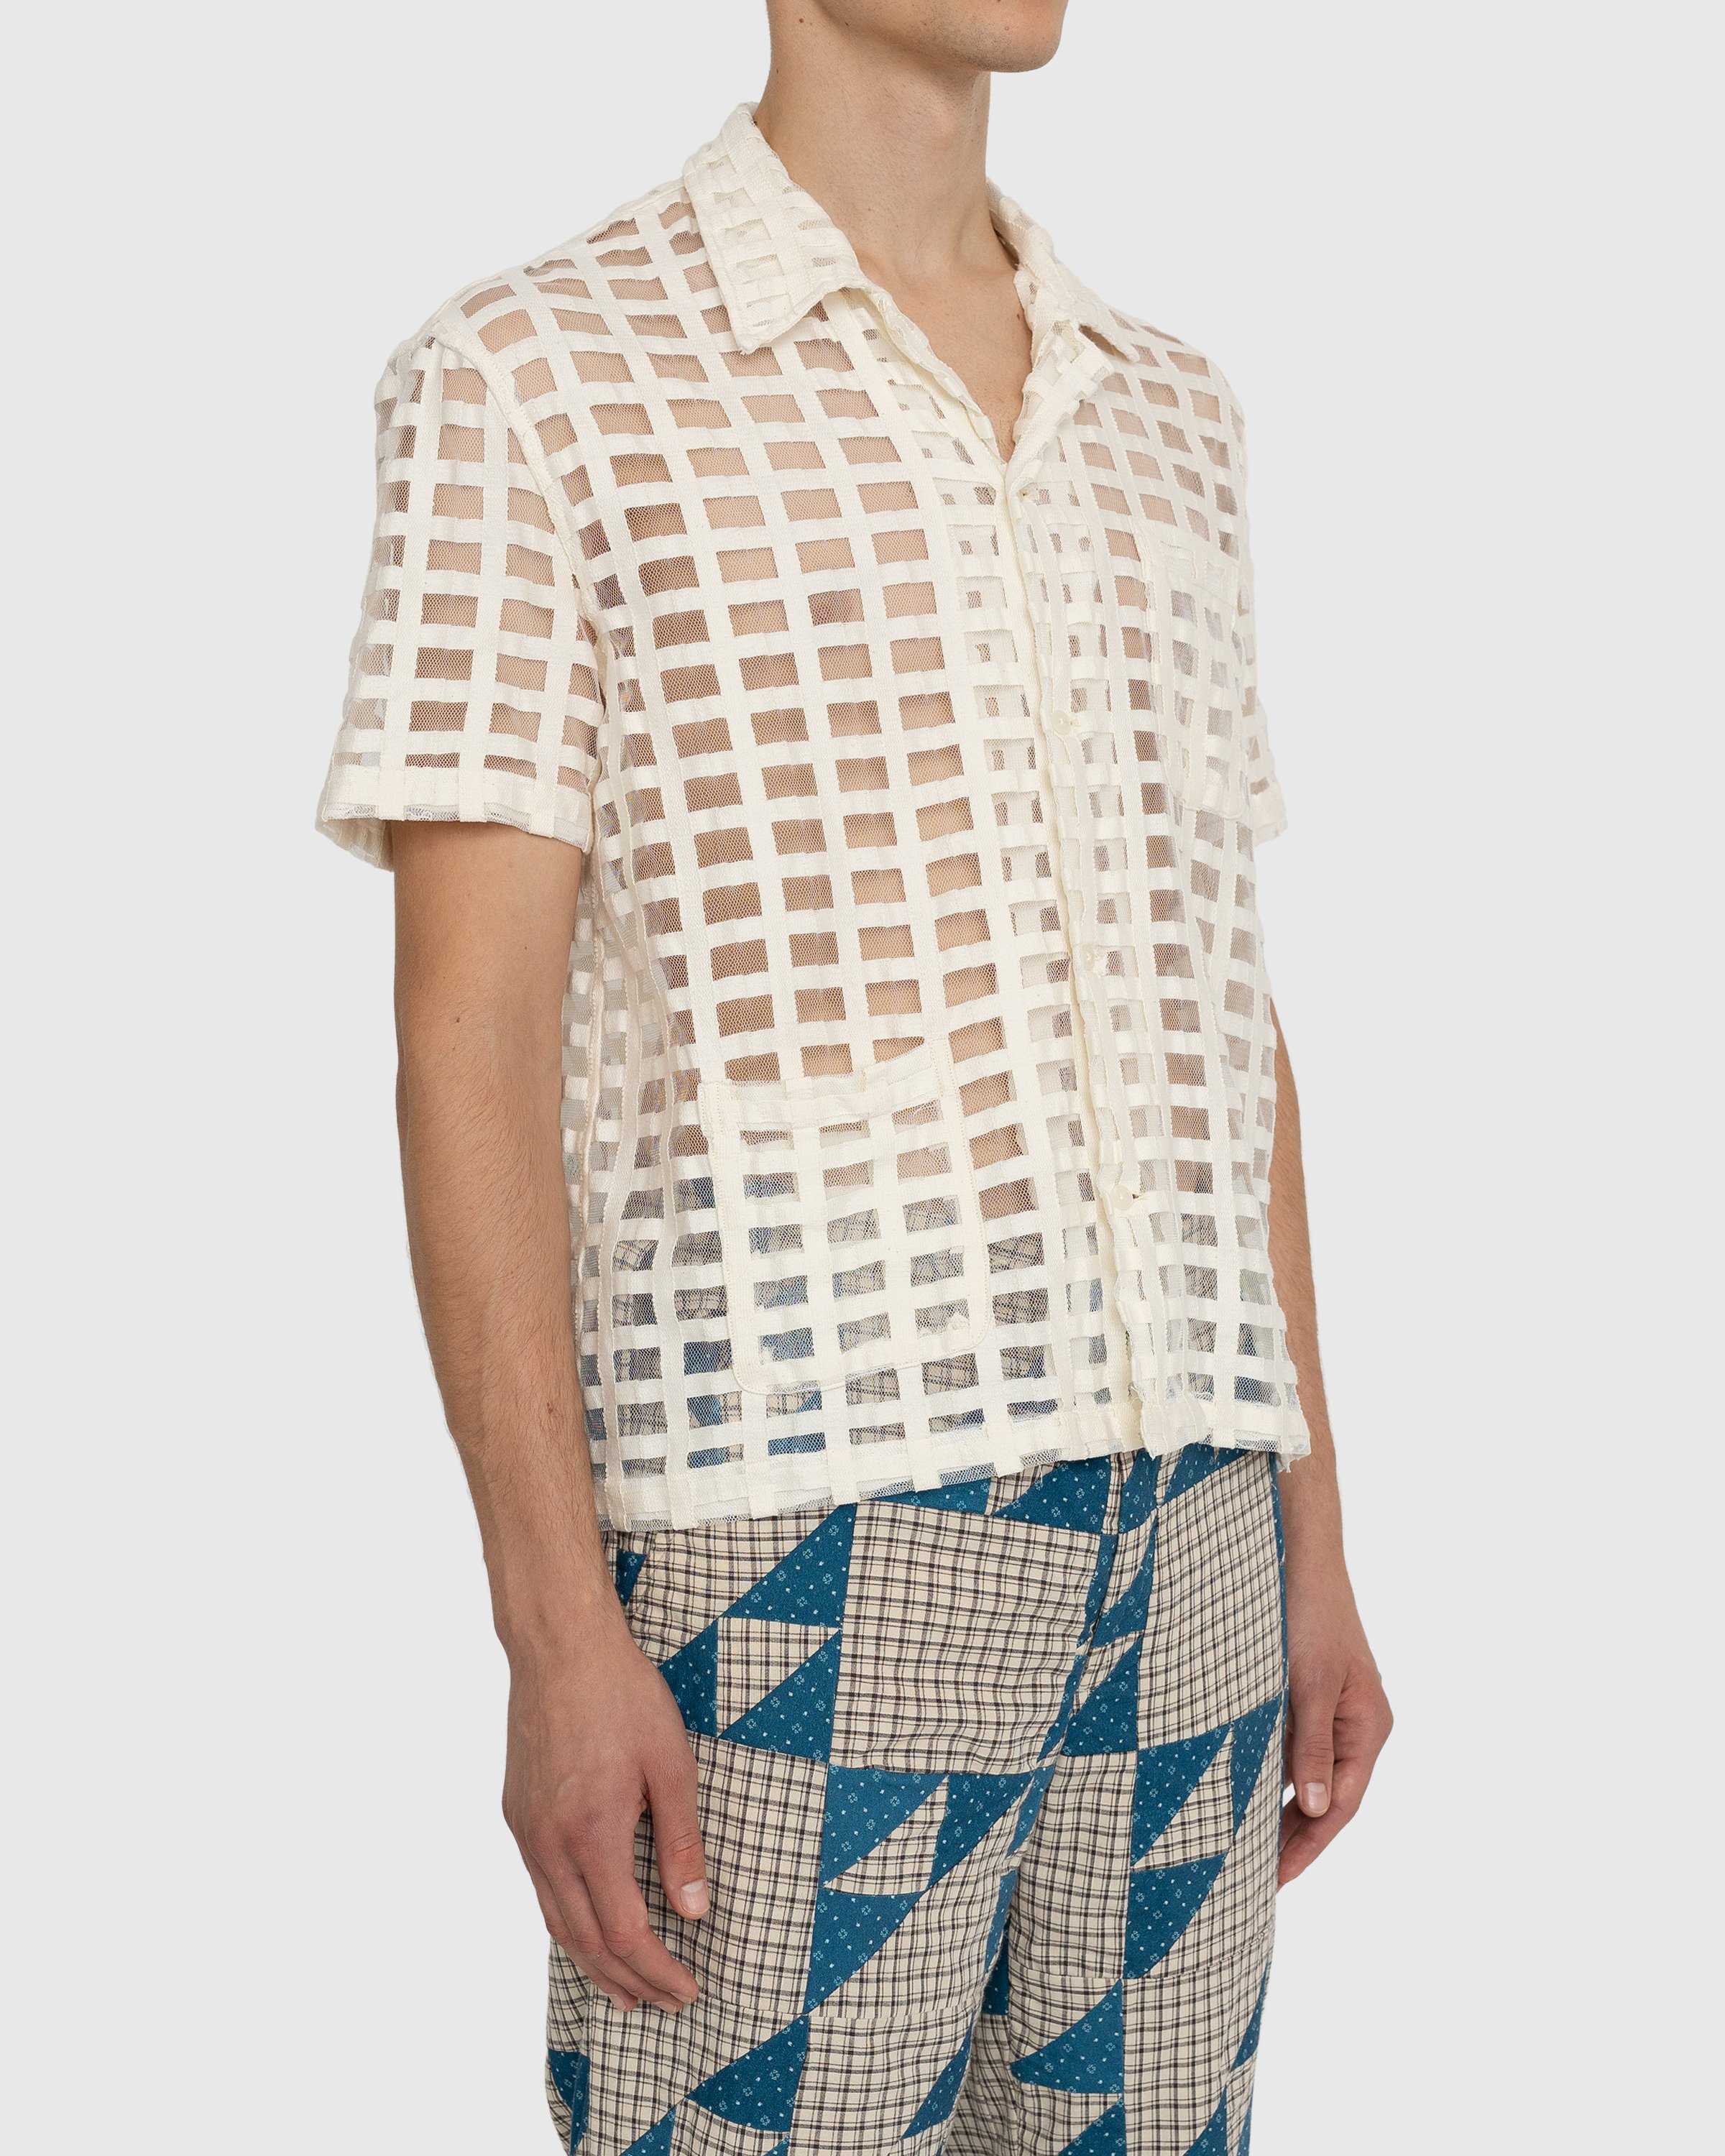 Bode - Mesh Grid Short-Sleeve Shirt Beige - Clothing - Beige - Image 3